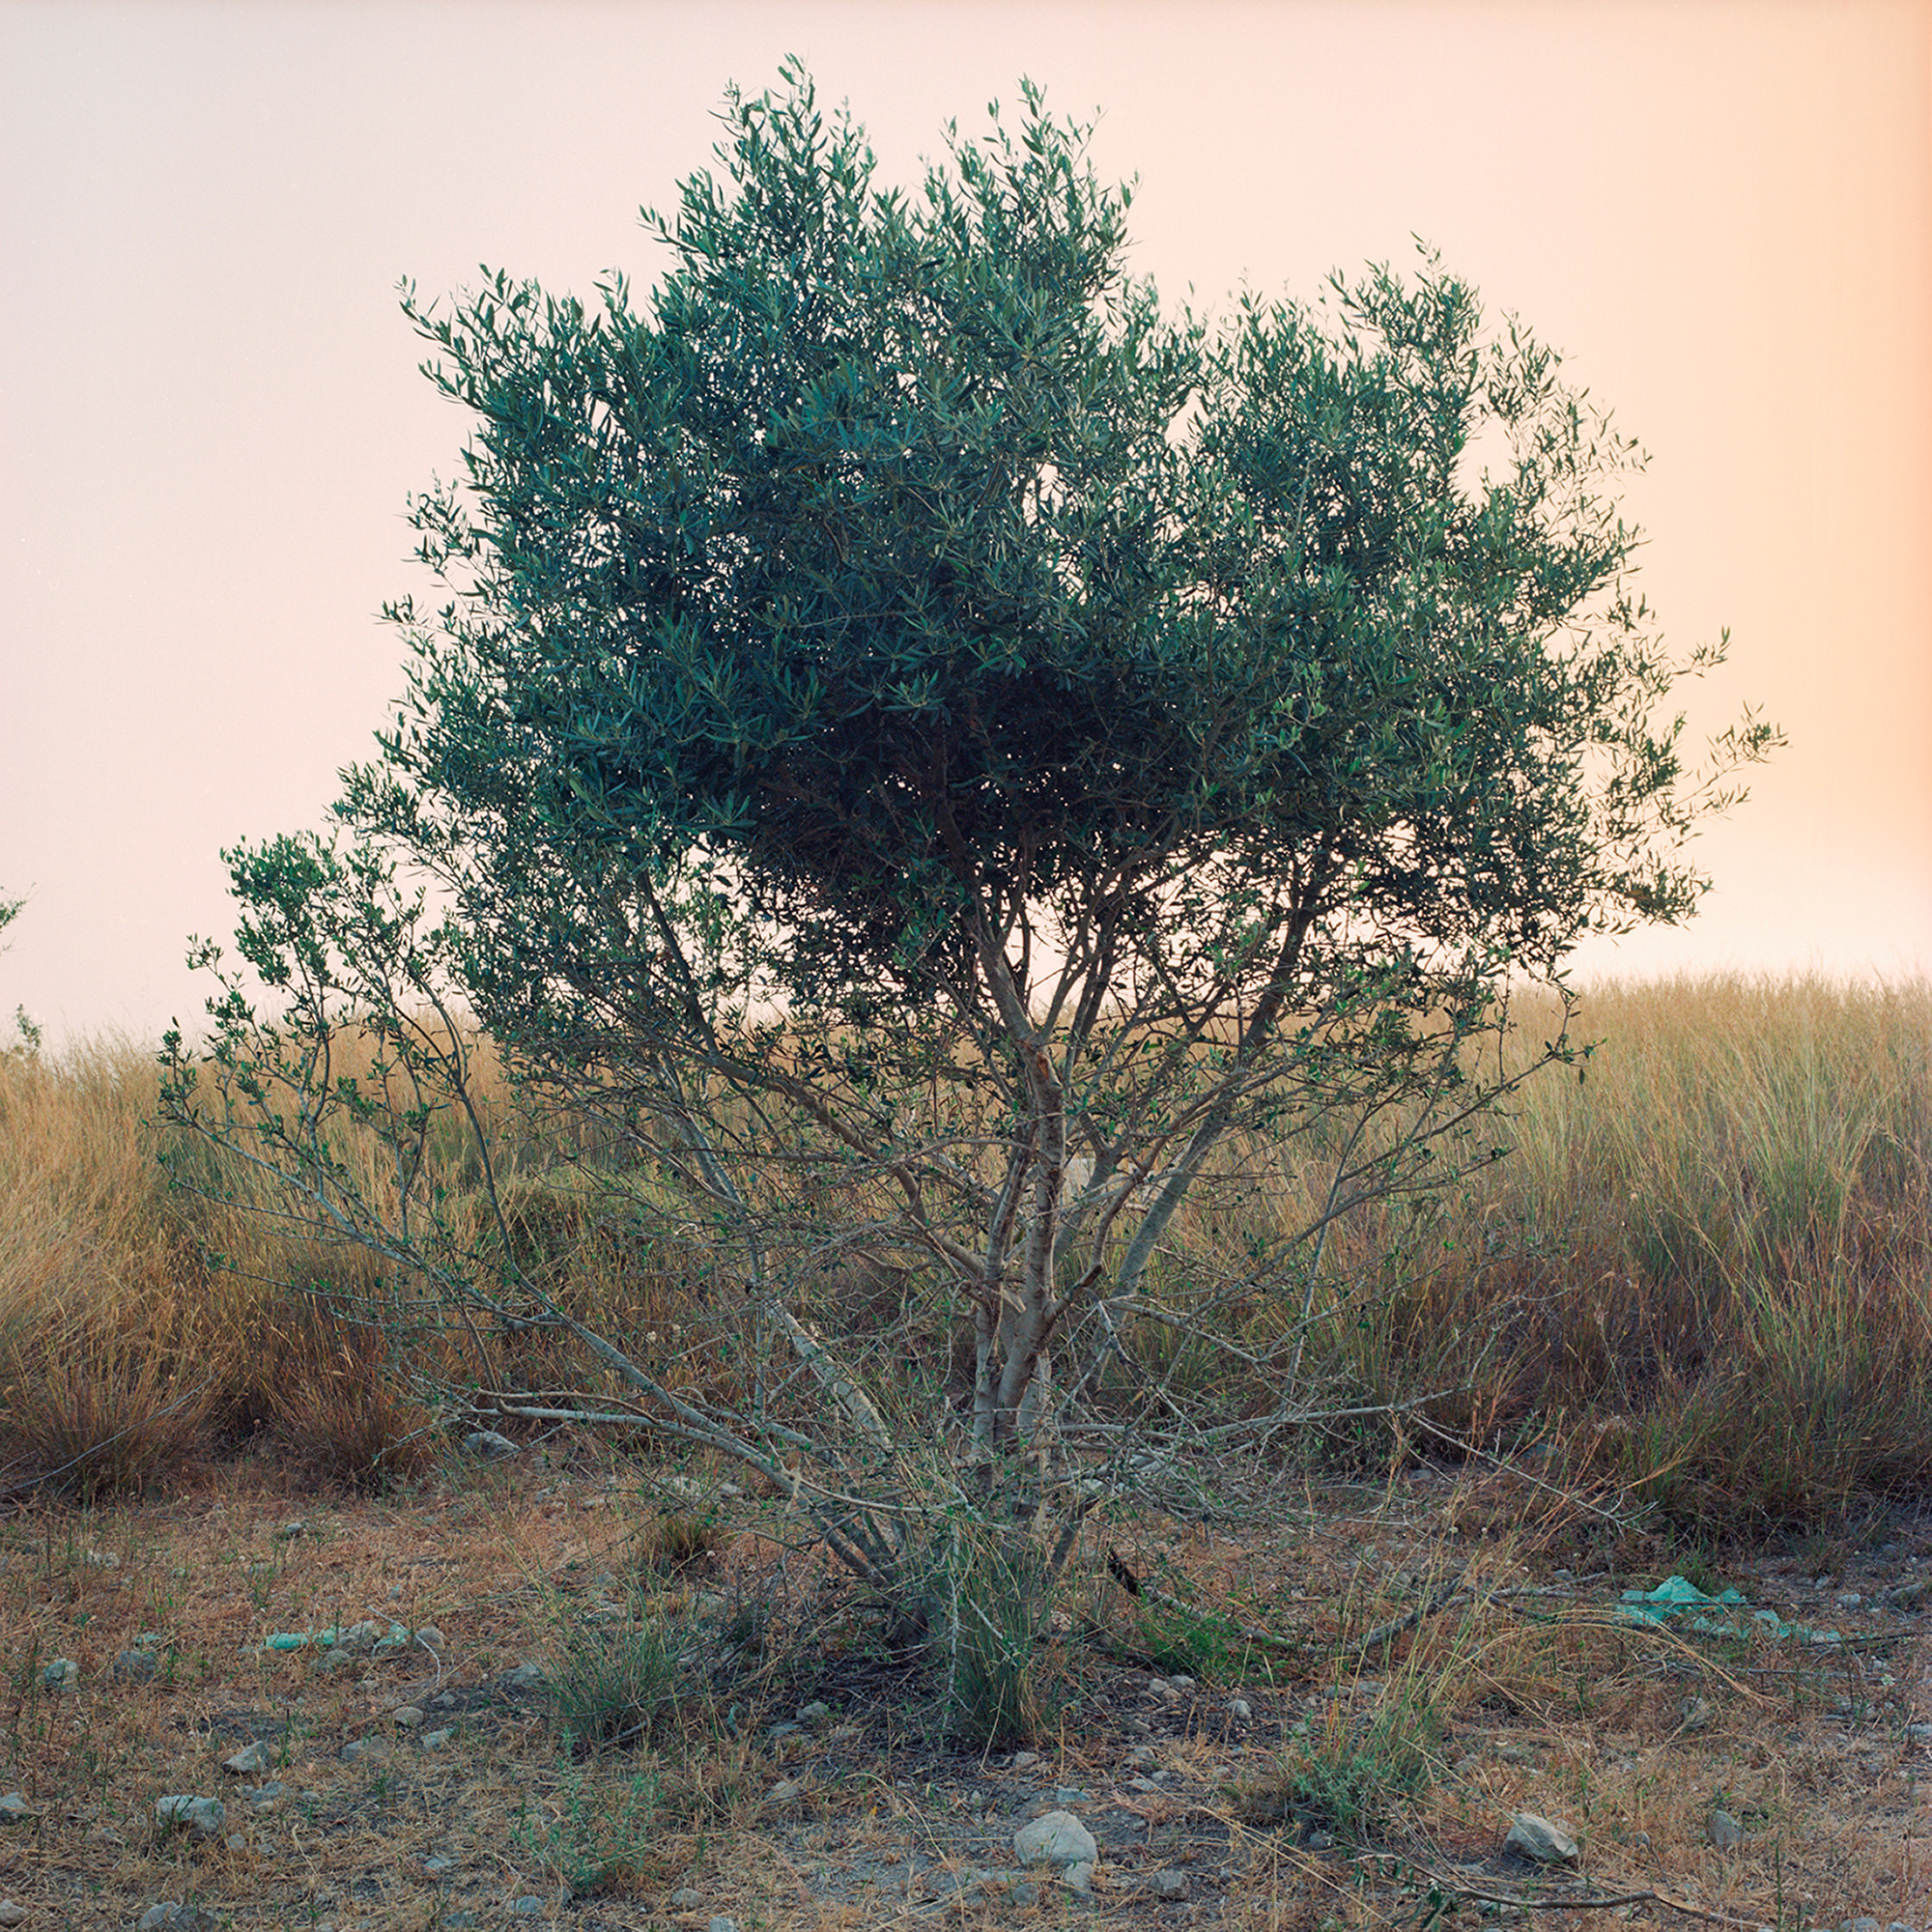 Olive Tree set against orange skies and yellow weeds